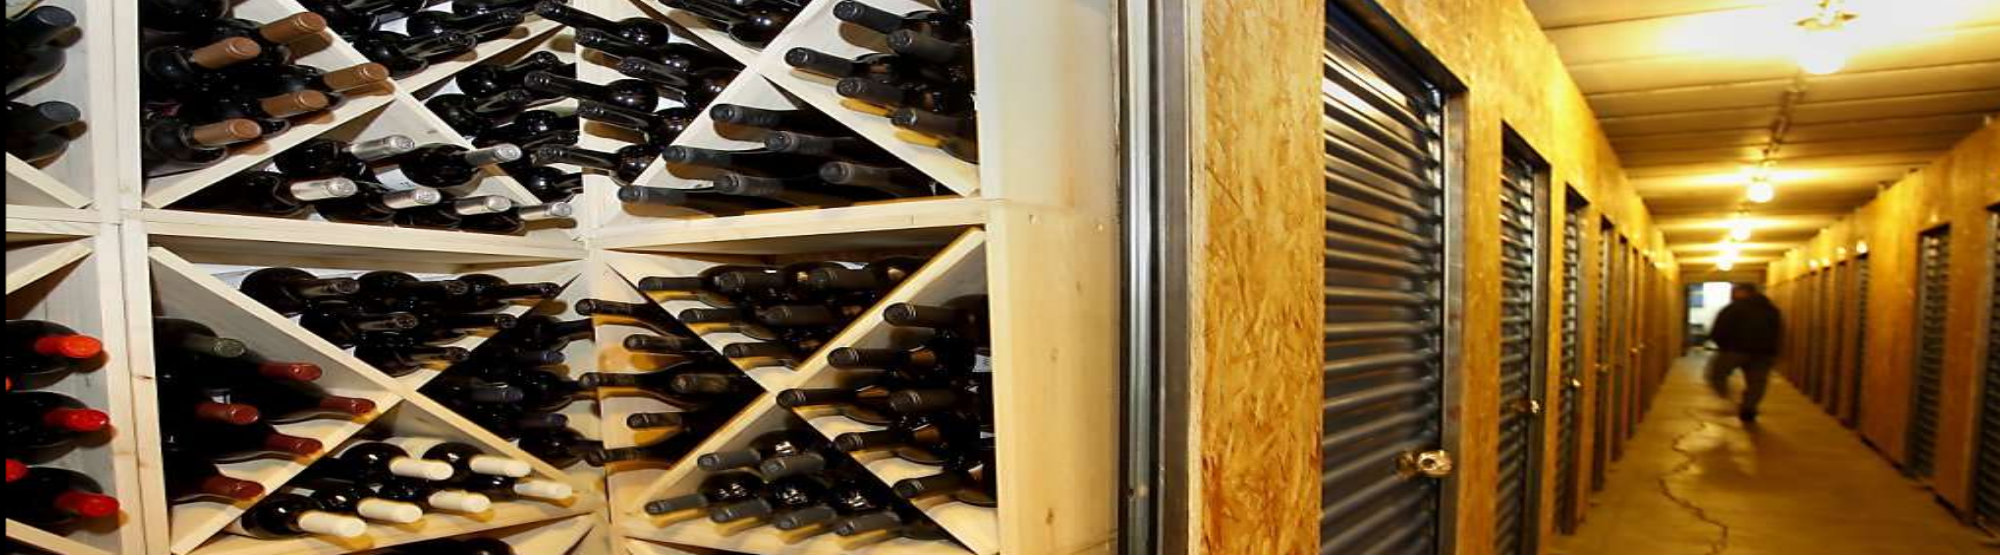 Wine Storage in San Francisco, CA